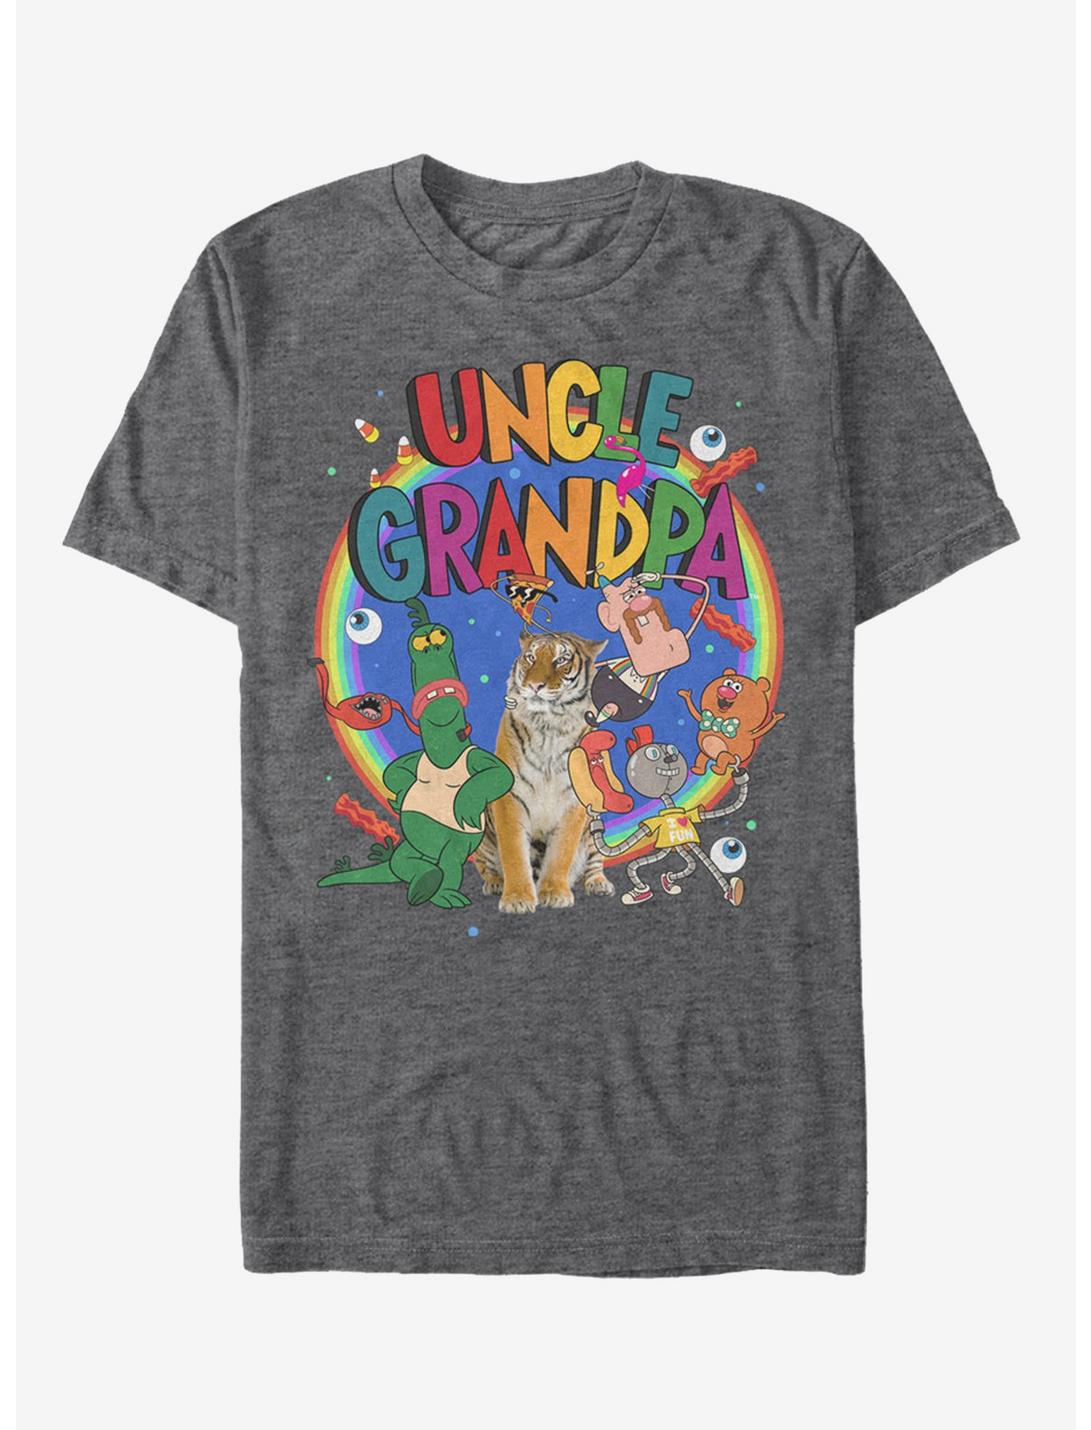 Uncle Grandpa "Lederhosen" Dye Sublimation T-Shirt